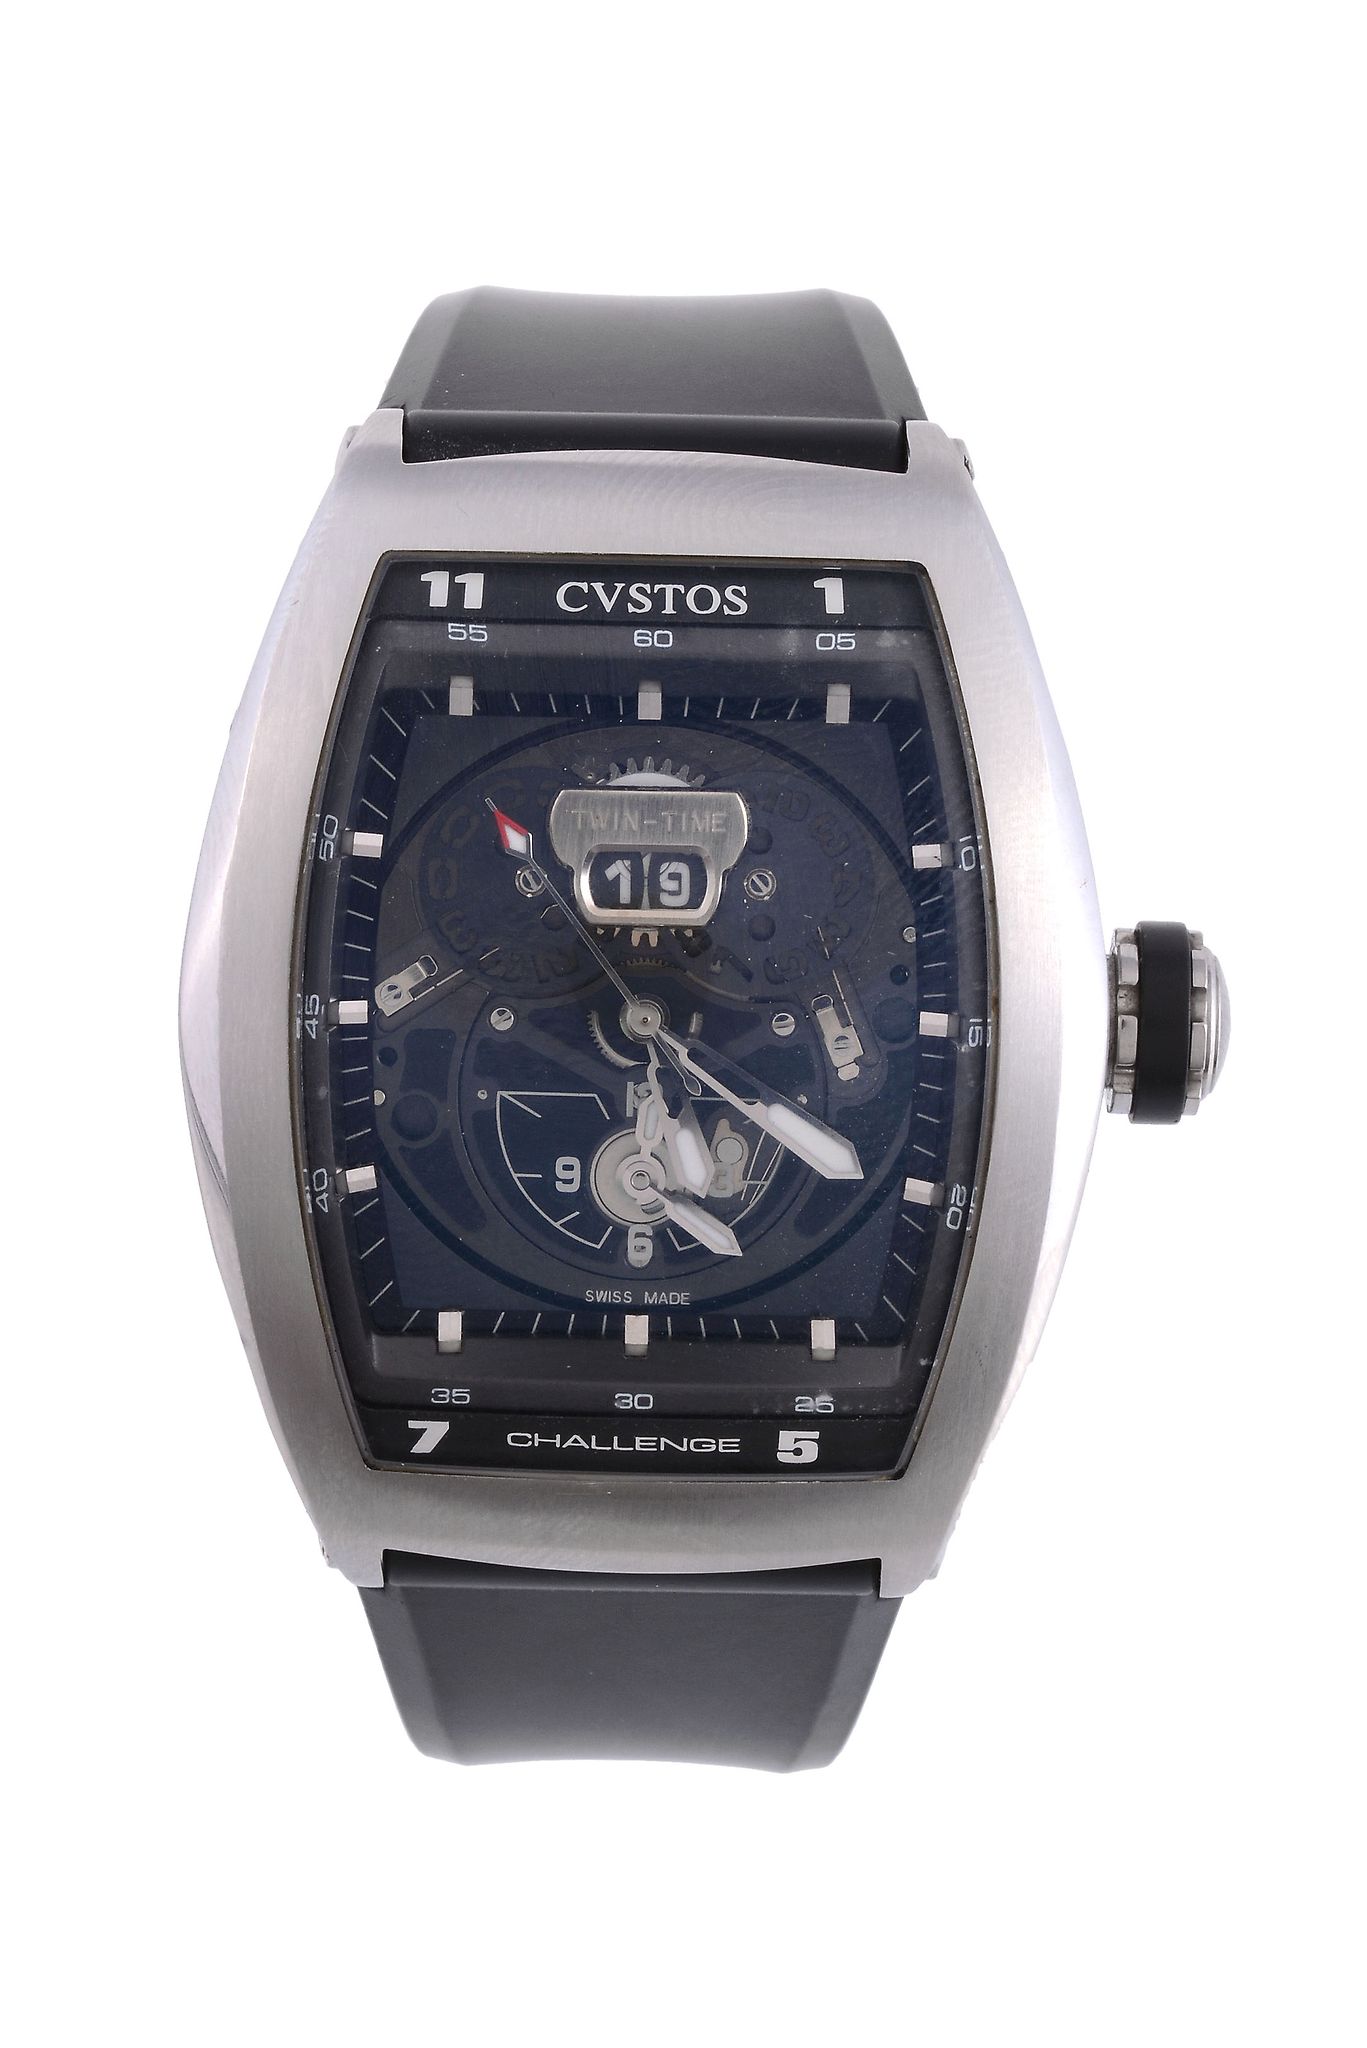 Cvstos, Challenge Twin-Time, ref. 085/200-01 ST, a stainless steel wristwatch,   circa 2007,